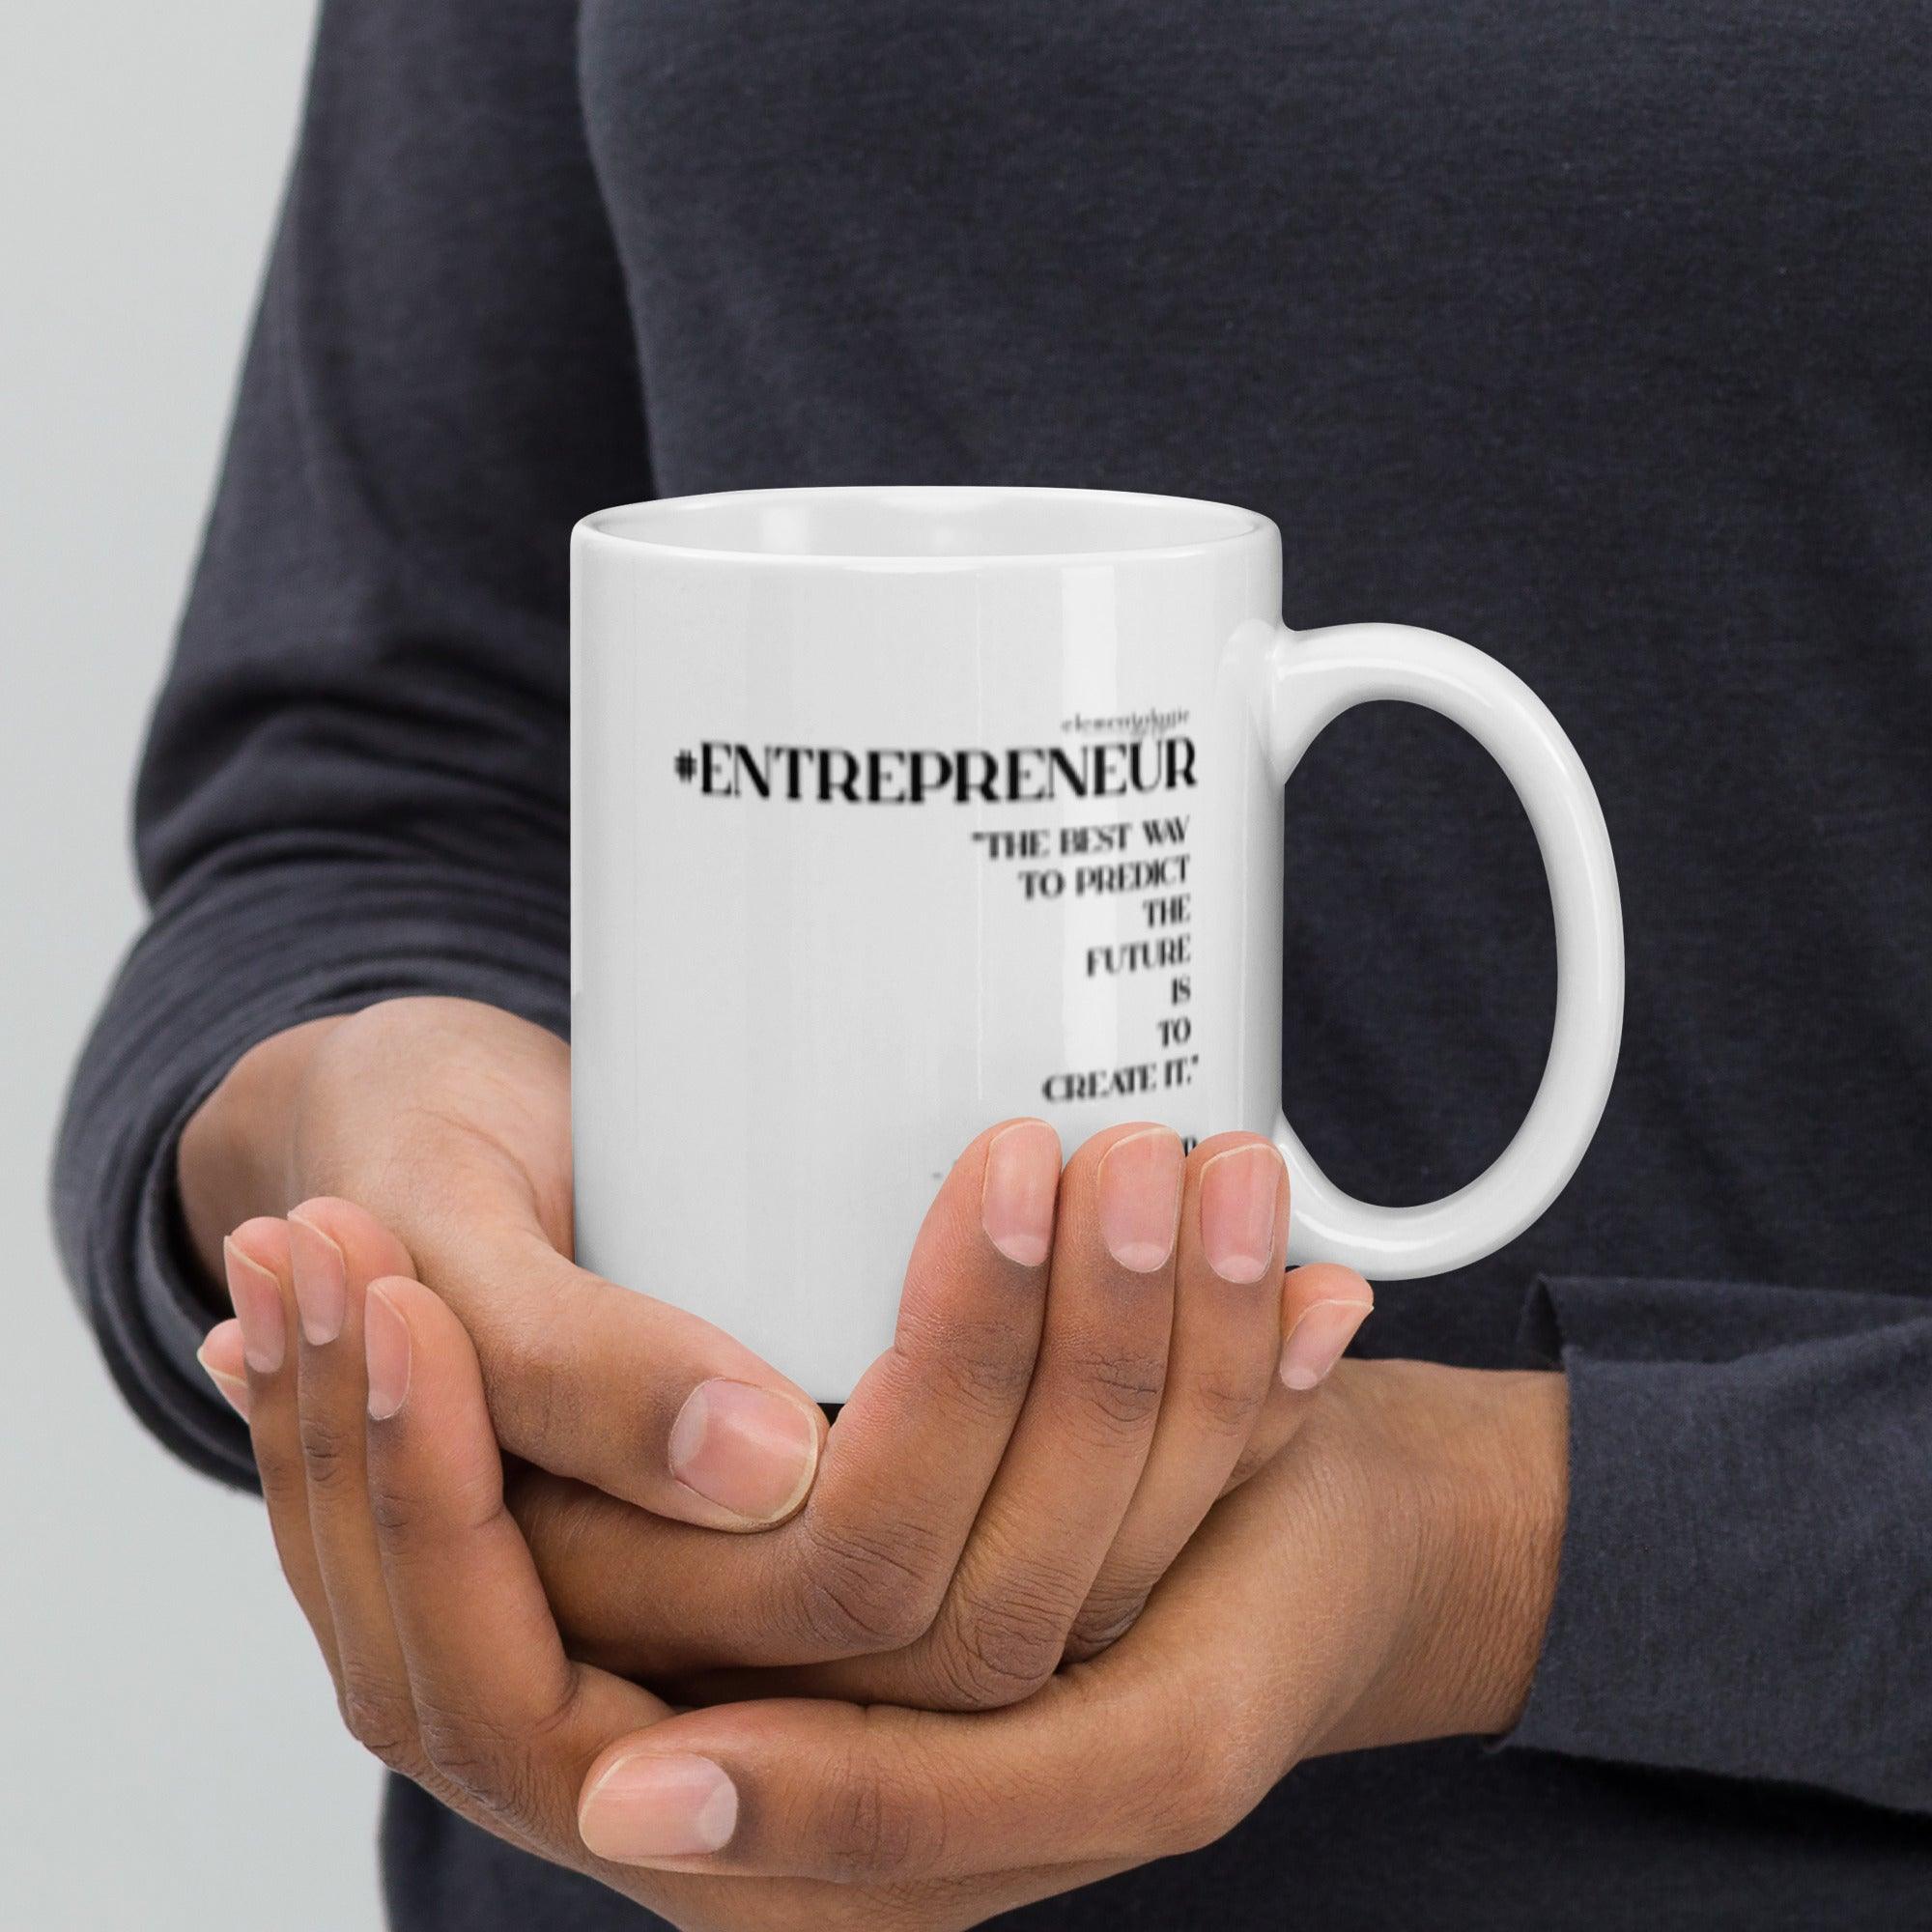 White glossy mug-#Entrepreneur-The Best Way to Predict the Future - Elementologie